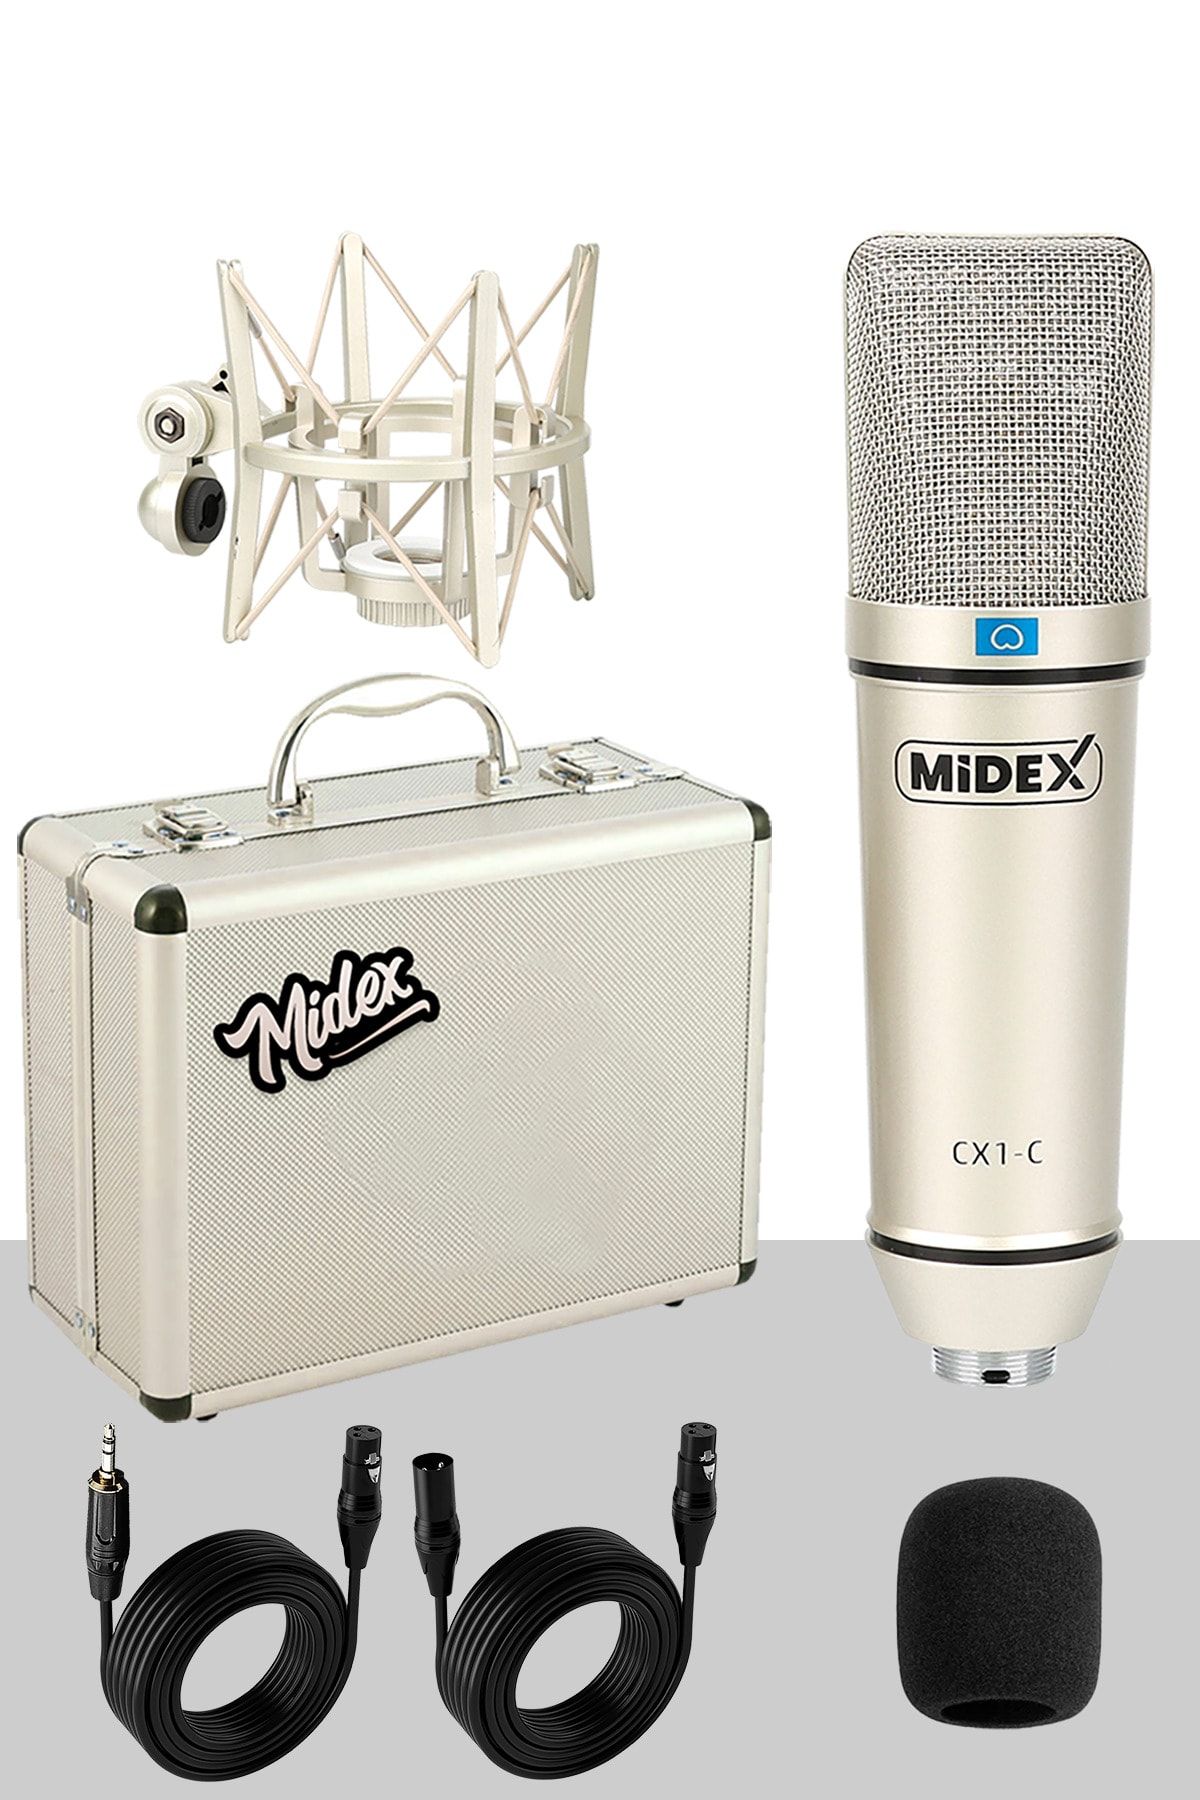 Midex Cx1 Profesyonel Condenser Stüdyo Ses Kayıt Mikrofon Seti Hardcase Ile Full Set